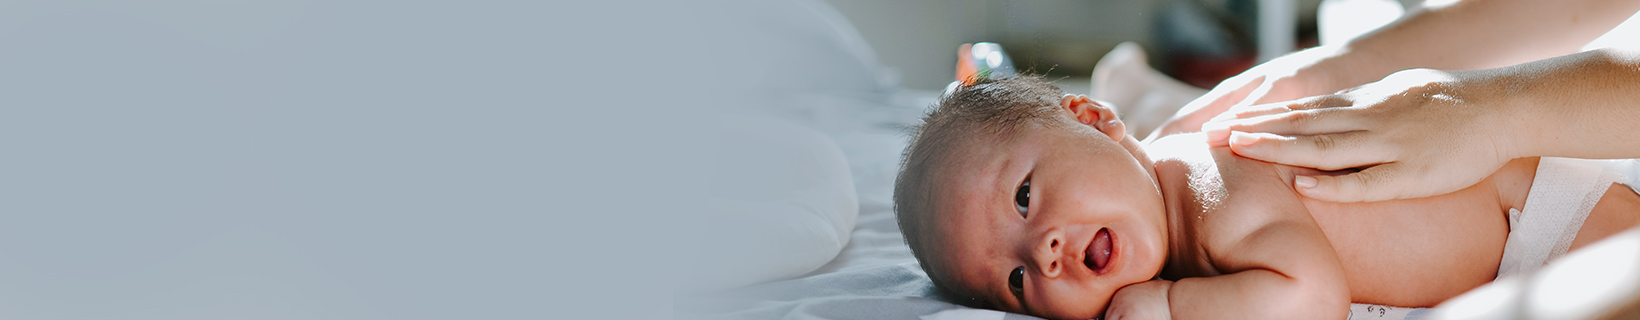 Baby care - Health care - baby massage - basics